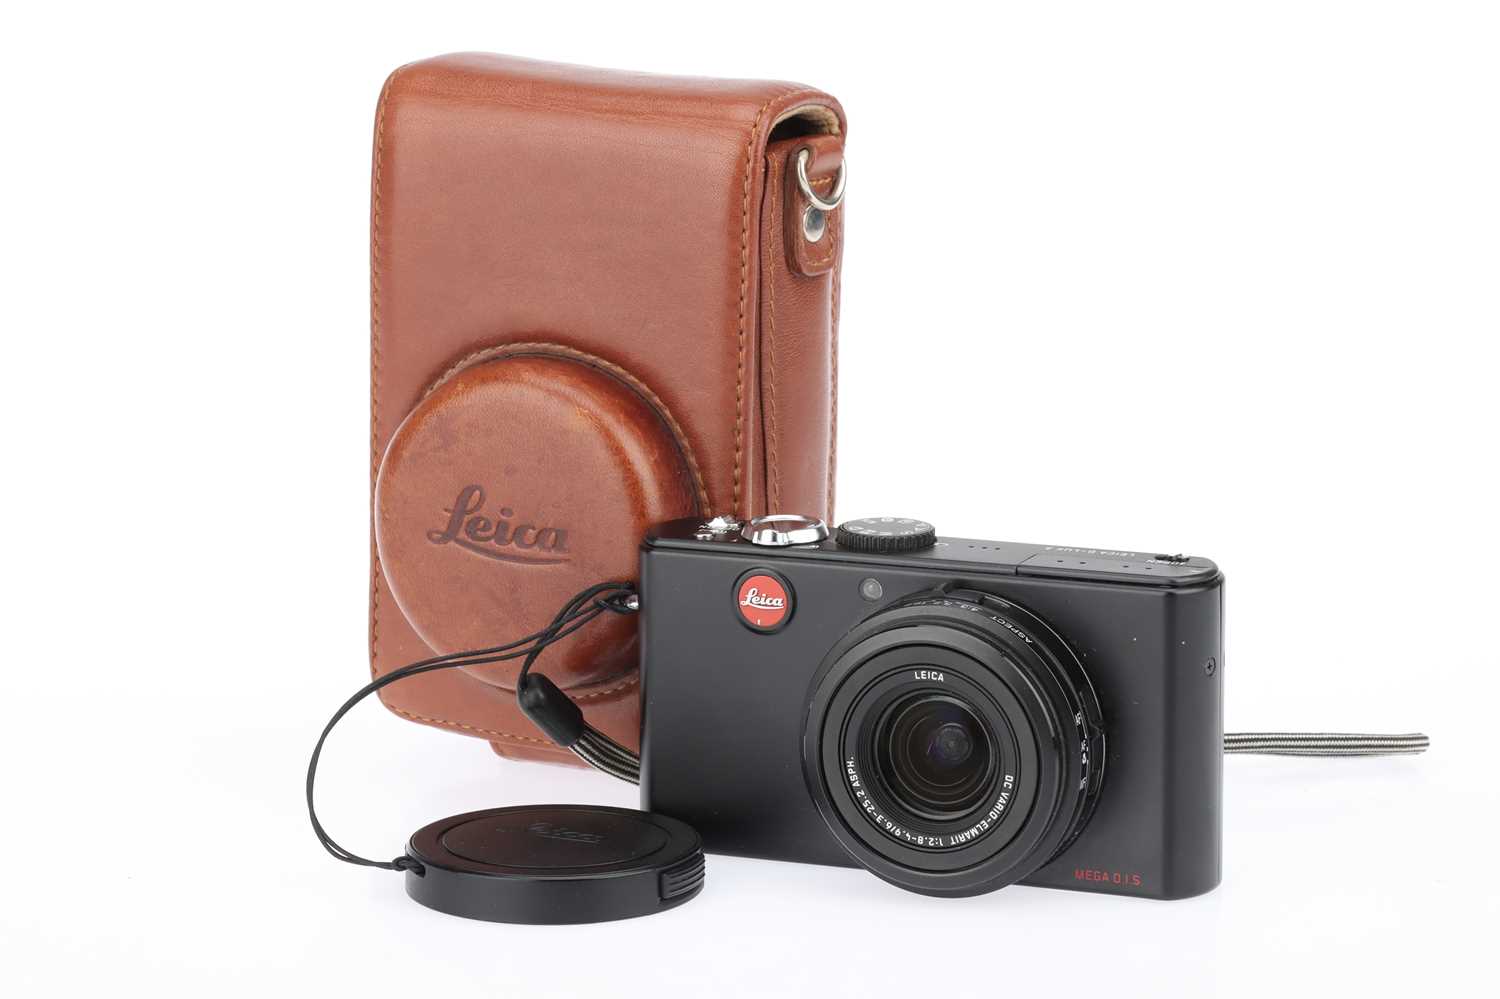 Lot 412 - A Leica D-Lux 3 Compact Digital Camera